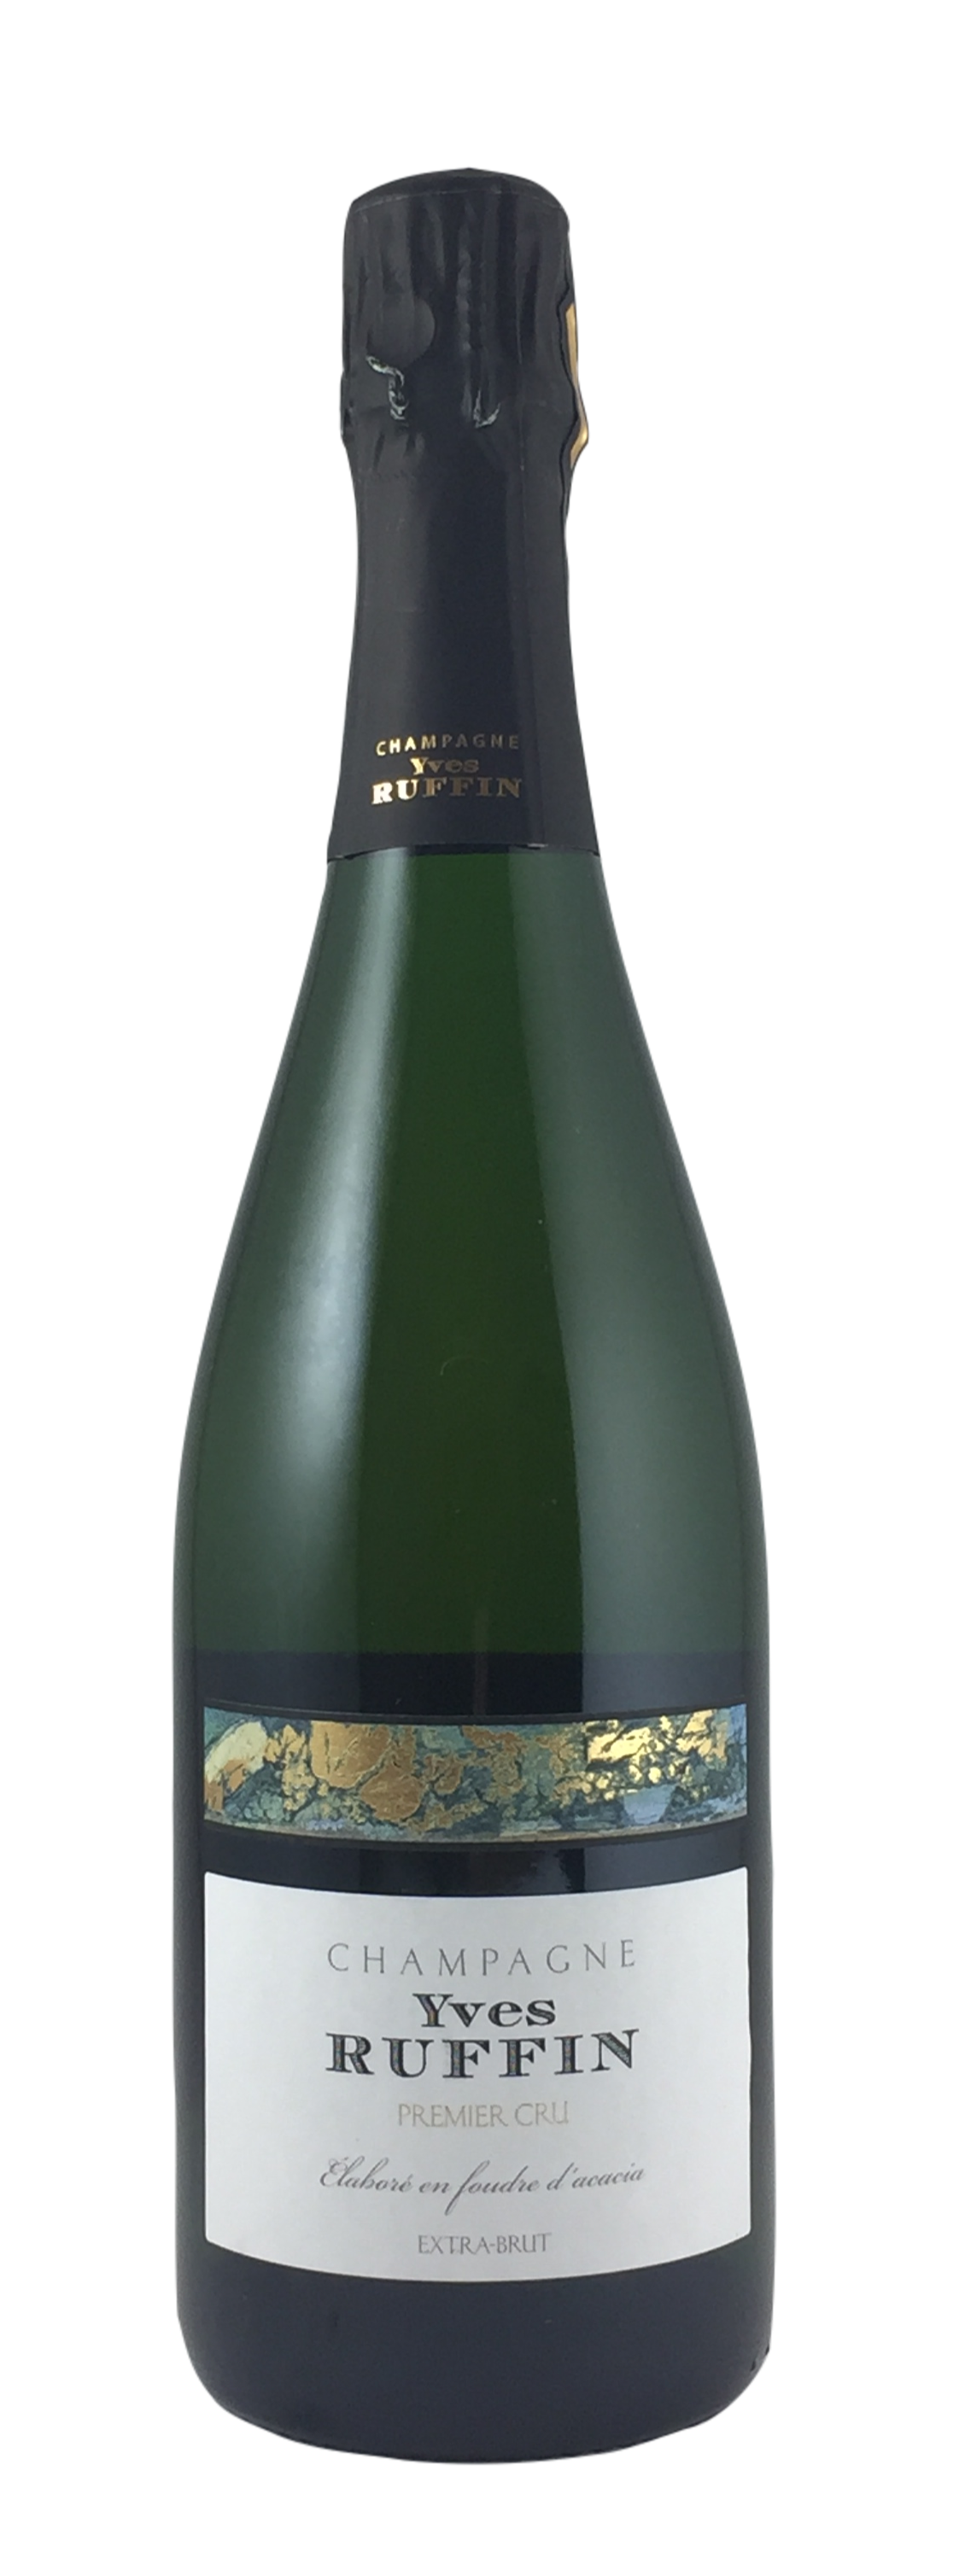  Champagne Yves Ruffin - Premier Cru extra brut "Elaboré foudre d'acacia"